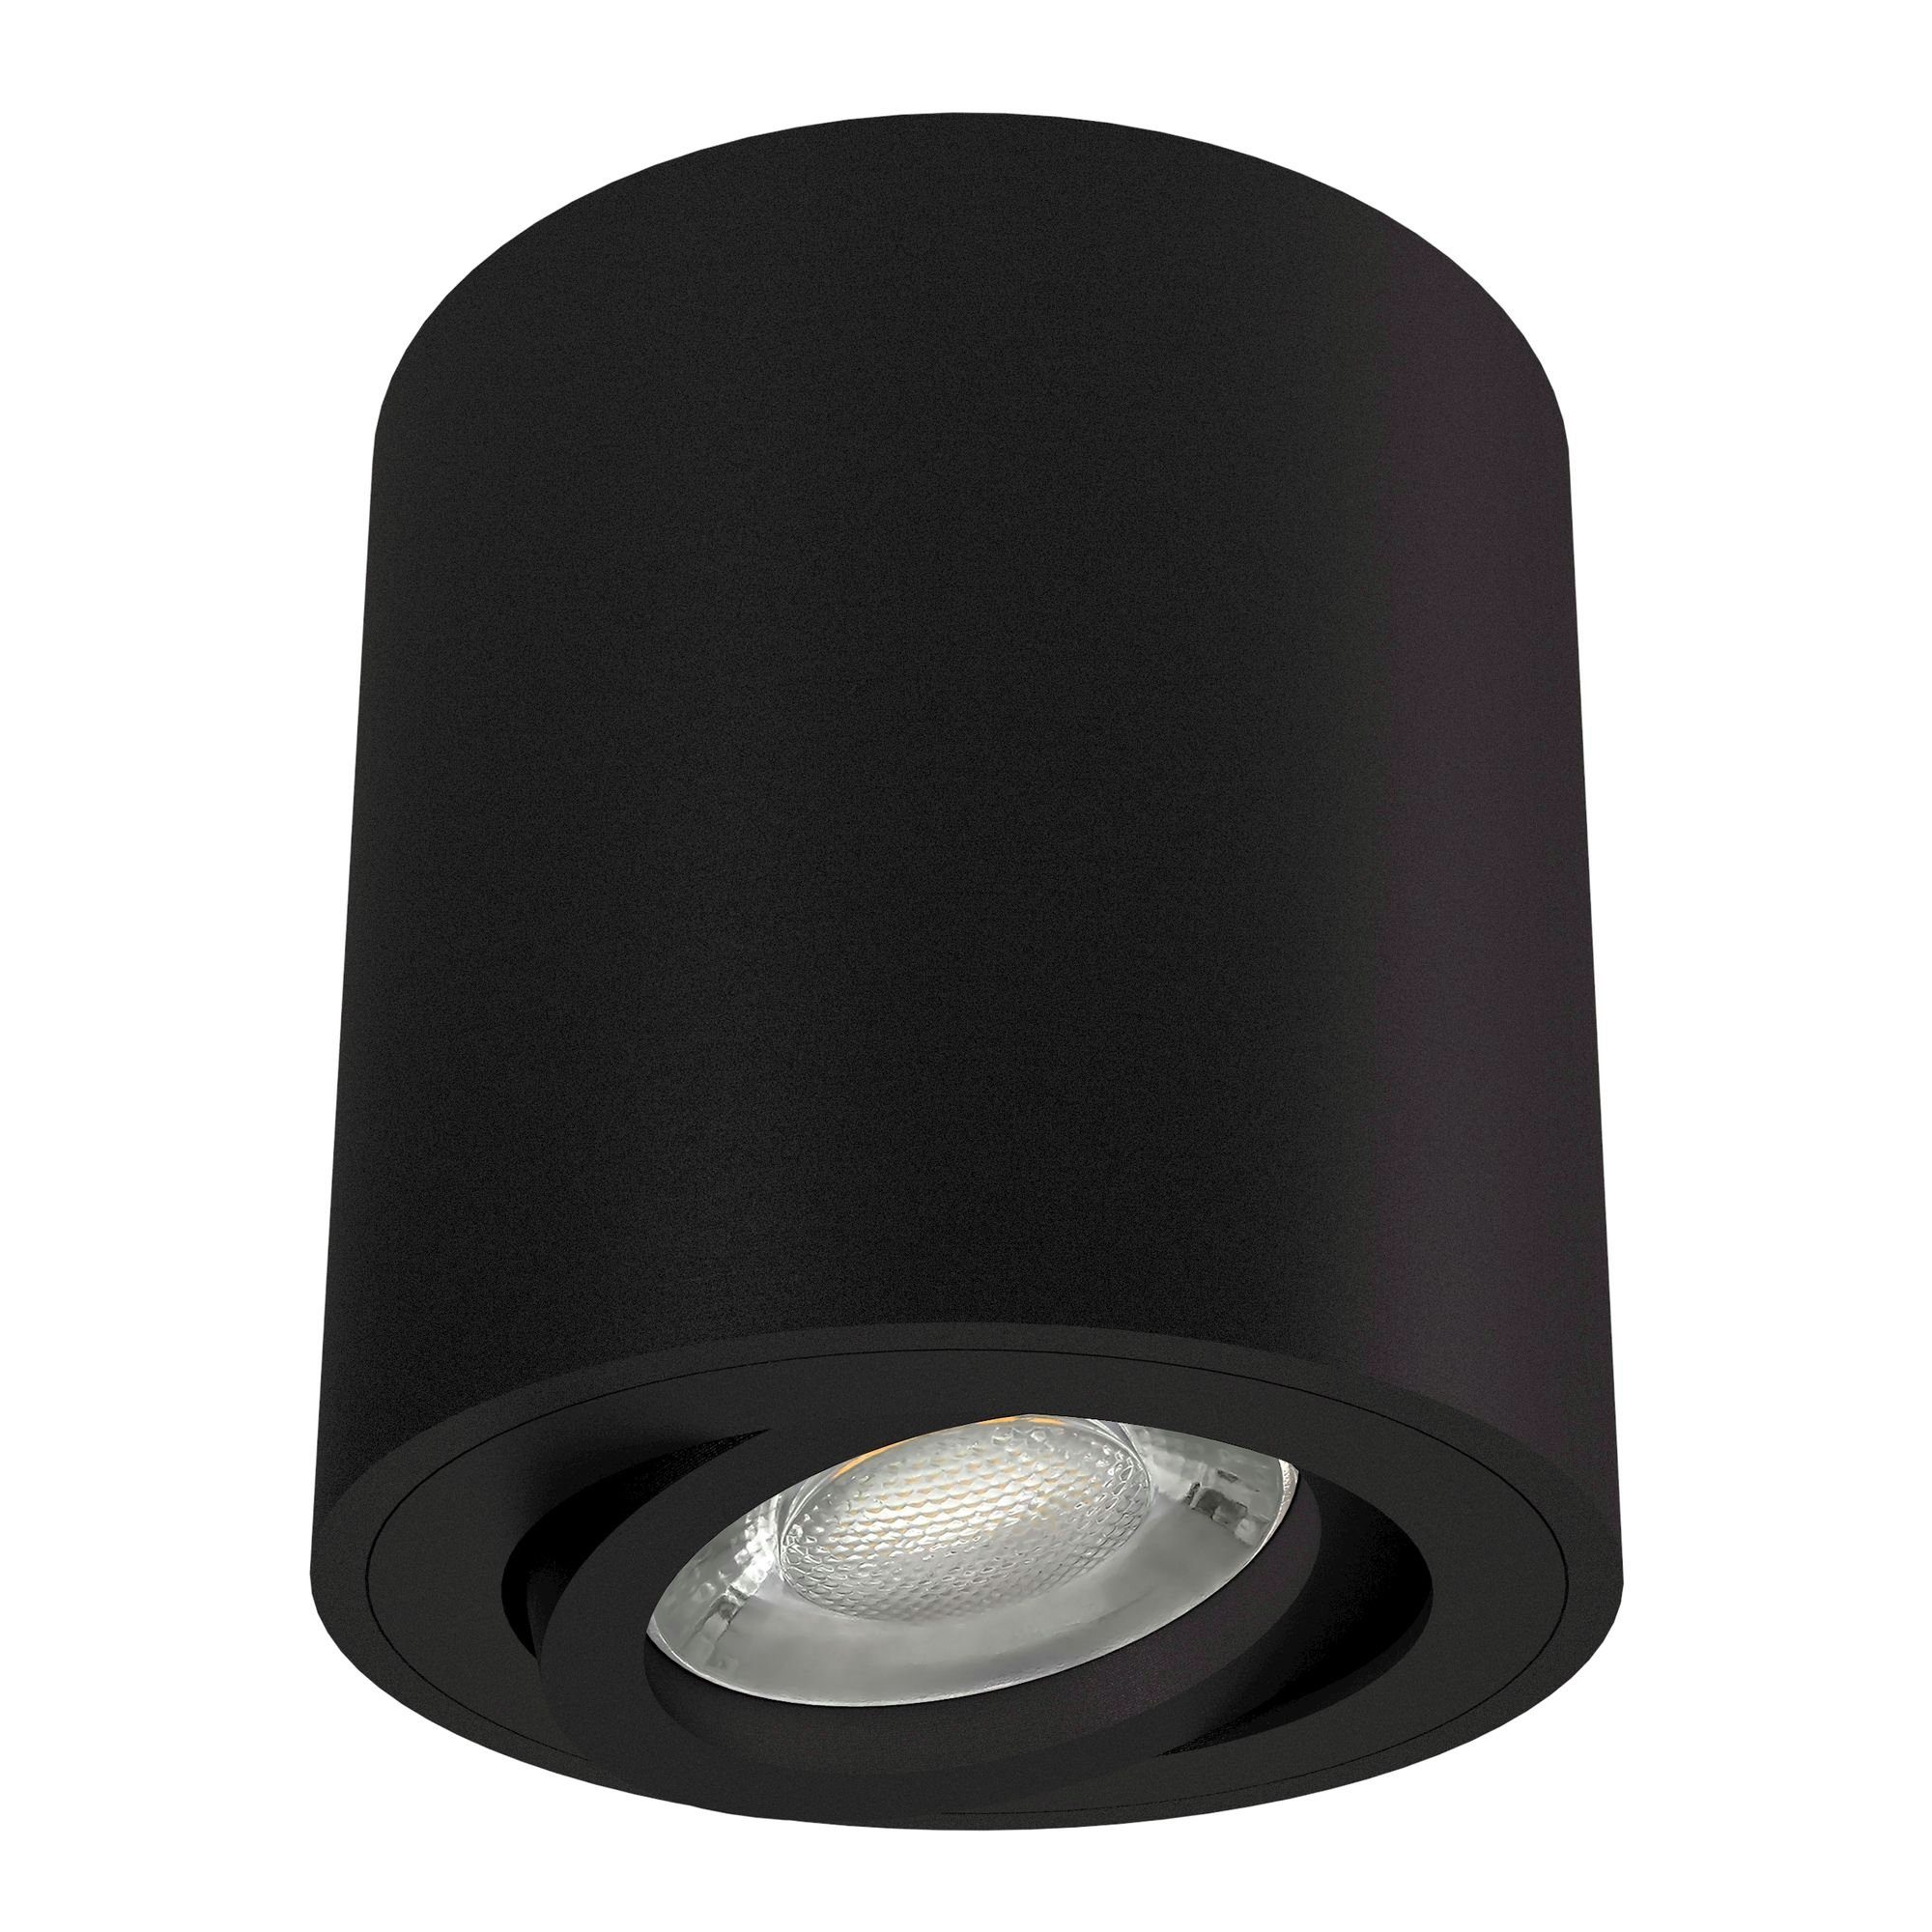 LED CORI linovum in LED GU10 inklusive, Aufbaustrahler & inklusive schwarz Leuchtmittel warmweiss, Aufbauleuchte 6W Leuchtmittel schwenkbar mit